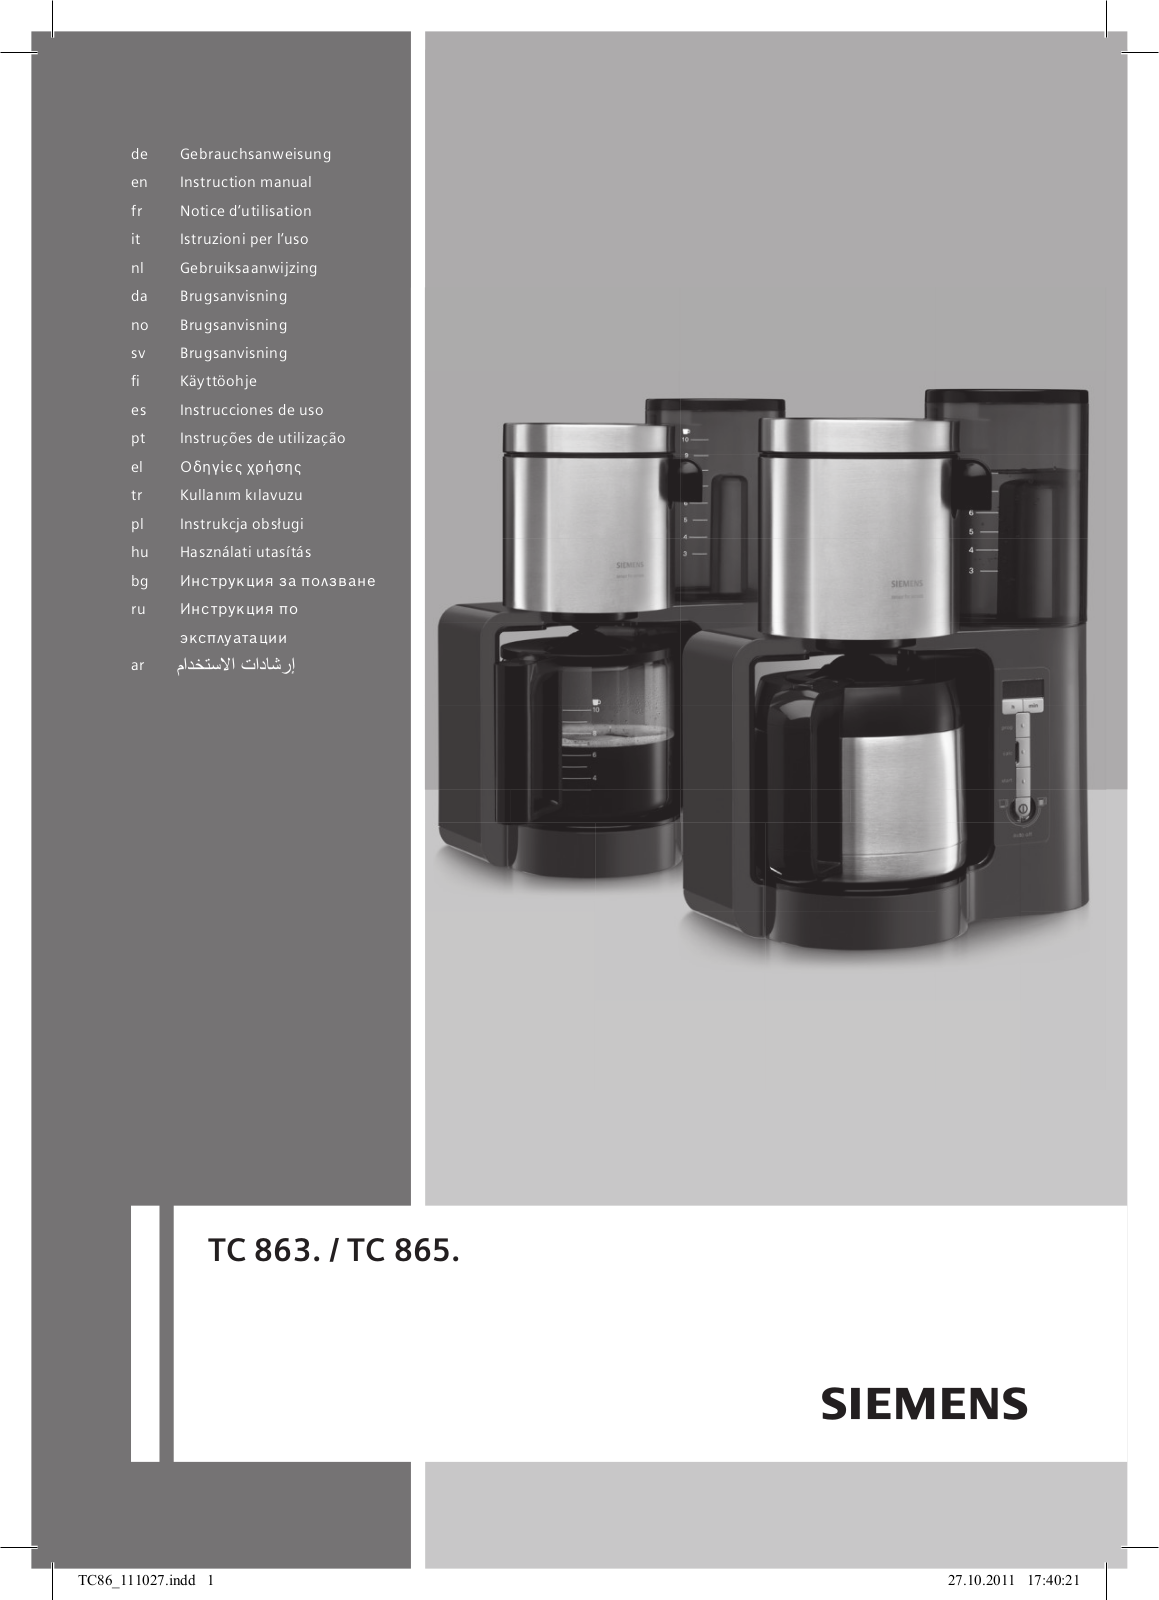 Siemens TC 86510 User Manual